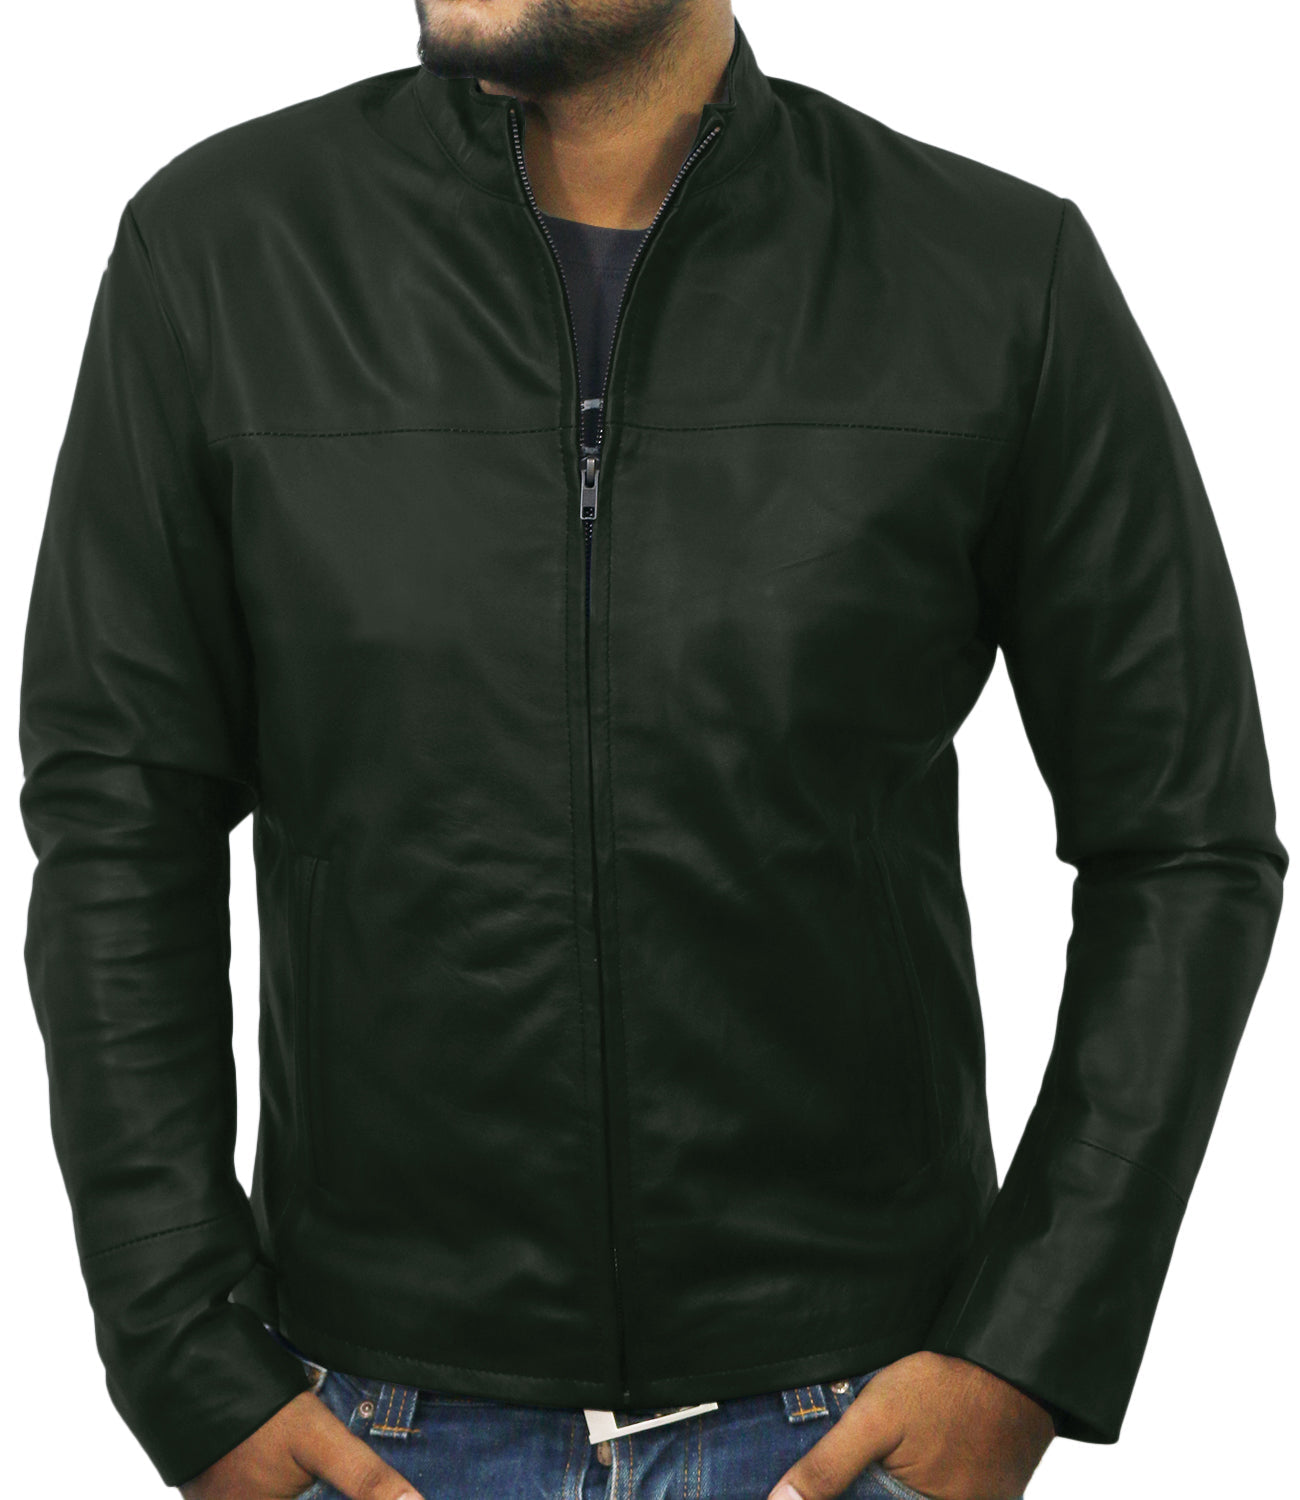 Leather Jackets Hub Mens Genuine Lambskin Leather Jacket (Black, Racer Jacket) - 1501212